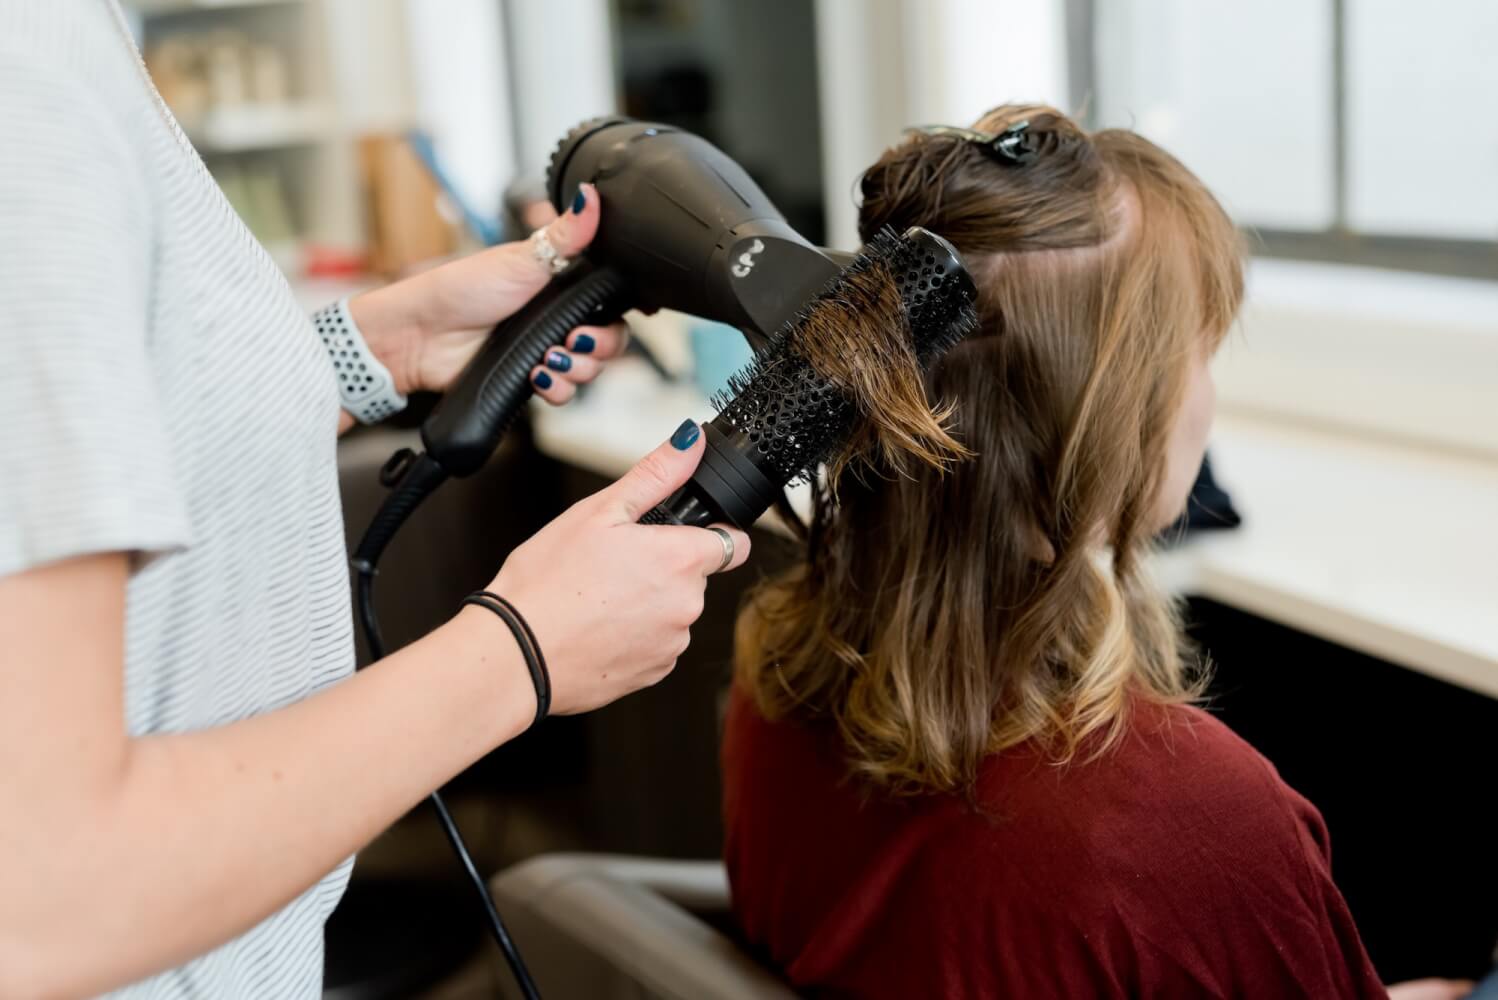 Woman holding hair dryer, drying customers hair.